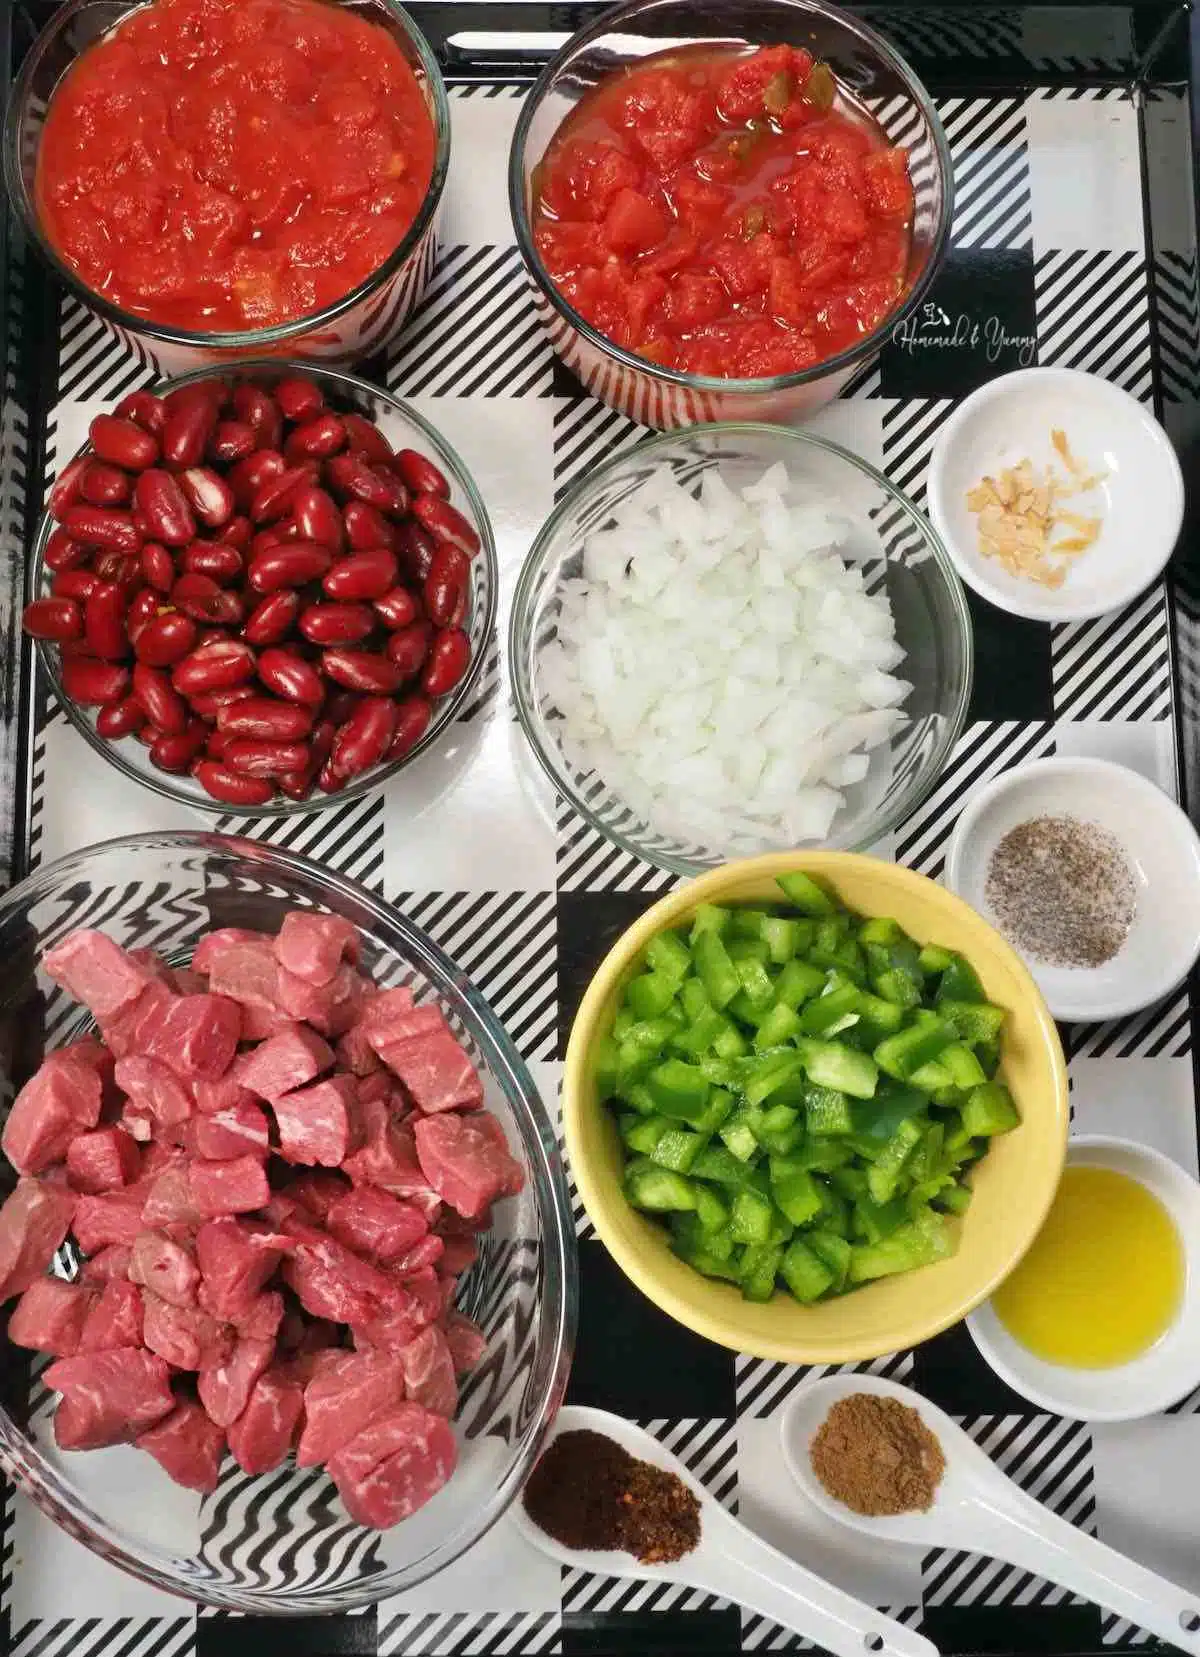 Ingredients to make steak chili.